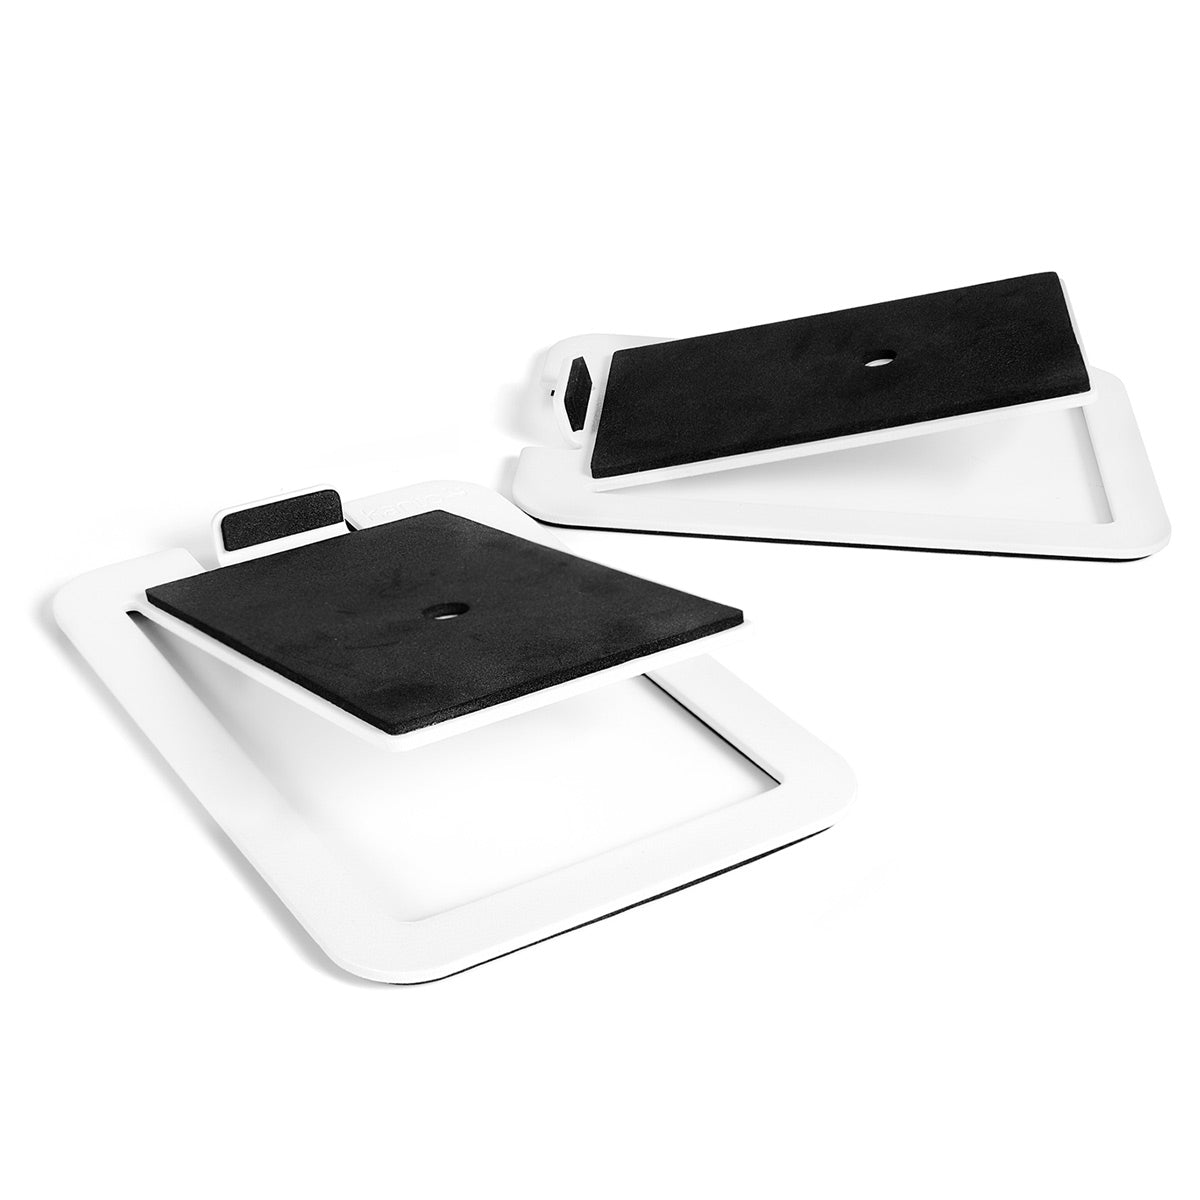 Kanto YUP4 Passive Bookshelf Speakers with S4 Speaker Stands - Pair (White)